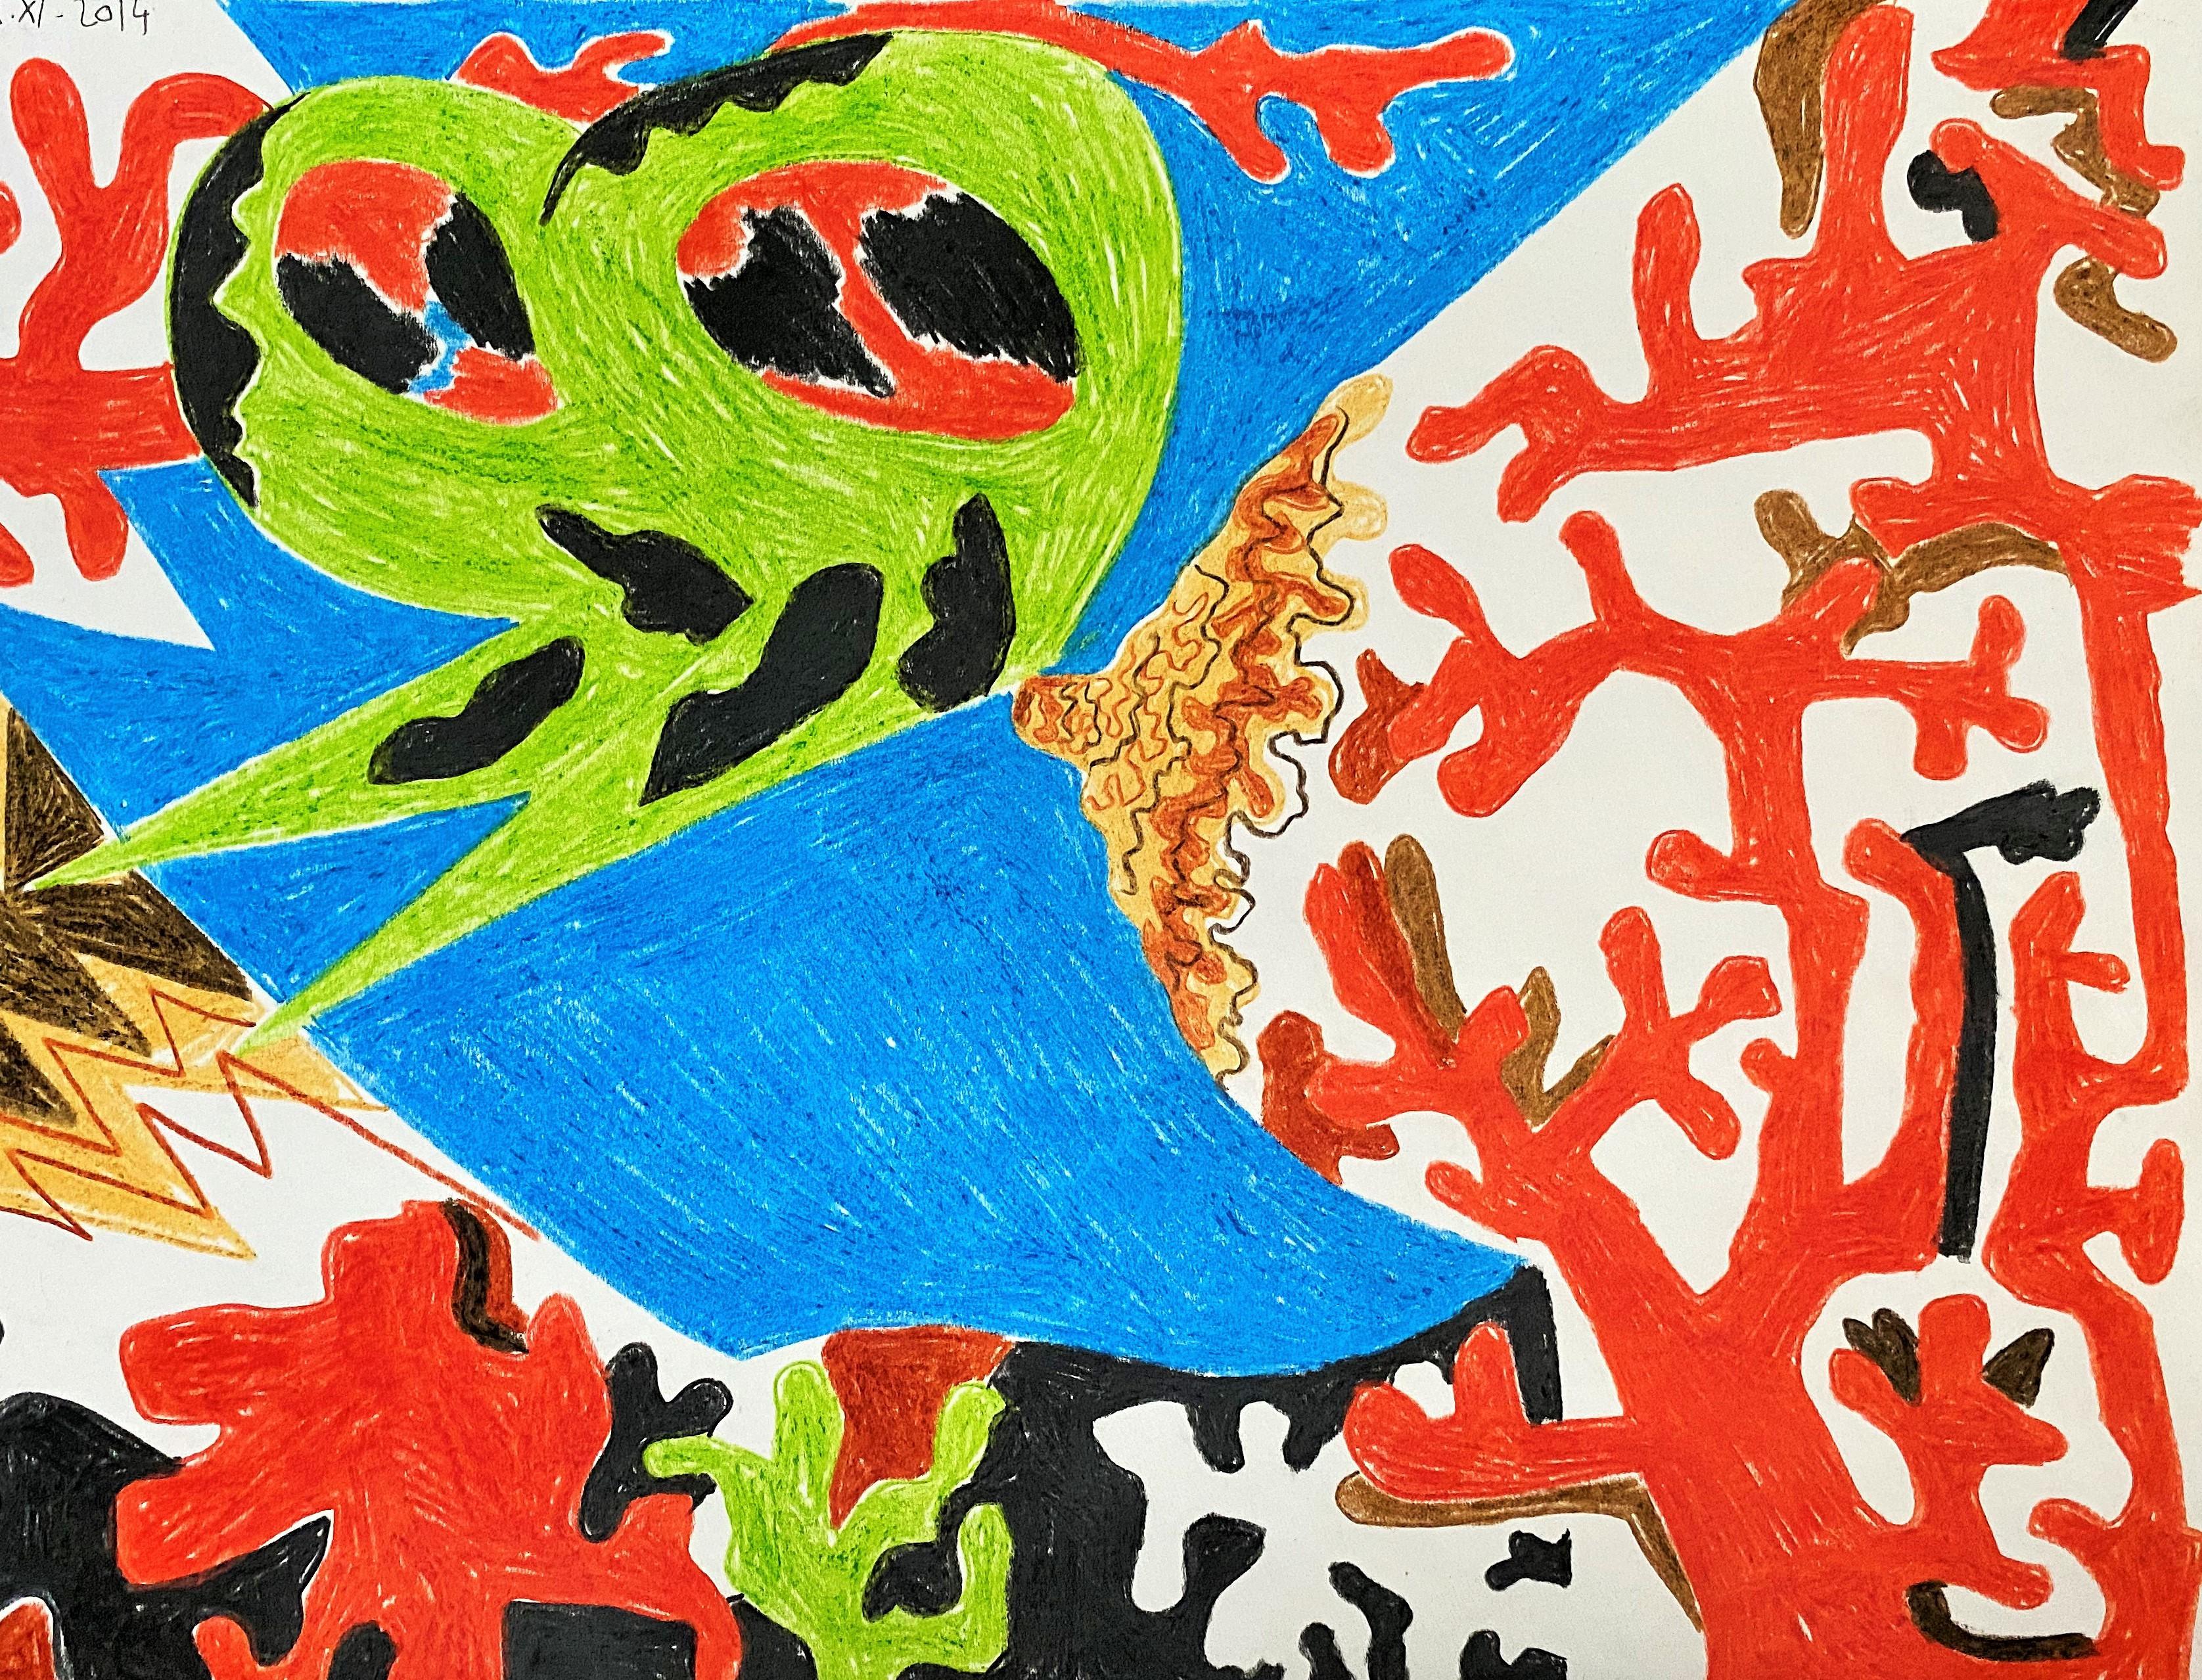 Island for Umberto 07 - Contemporary, Drawing, Red, Green, Blue, Butterffly - Beige Landscape Art by Alexandru Rădvan